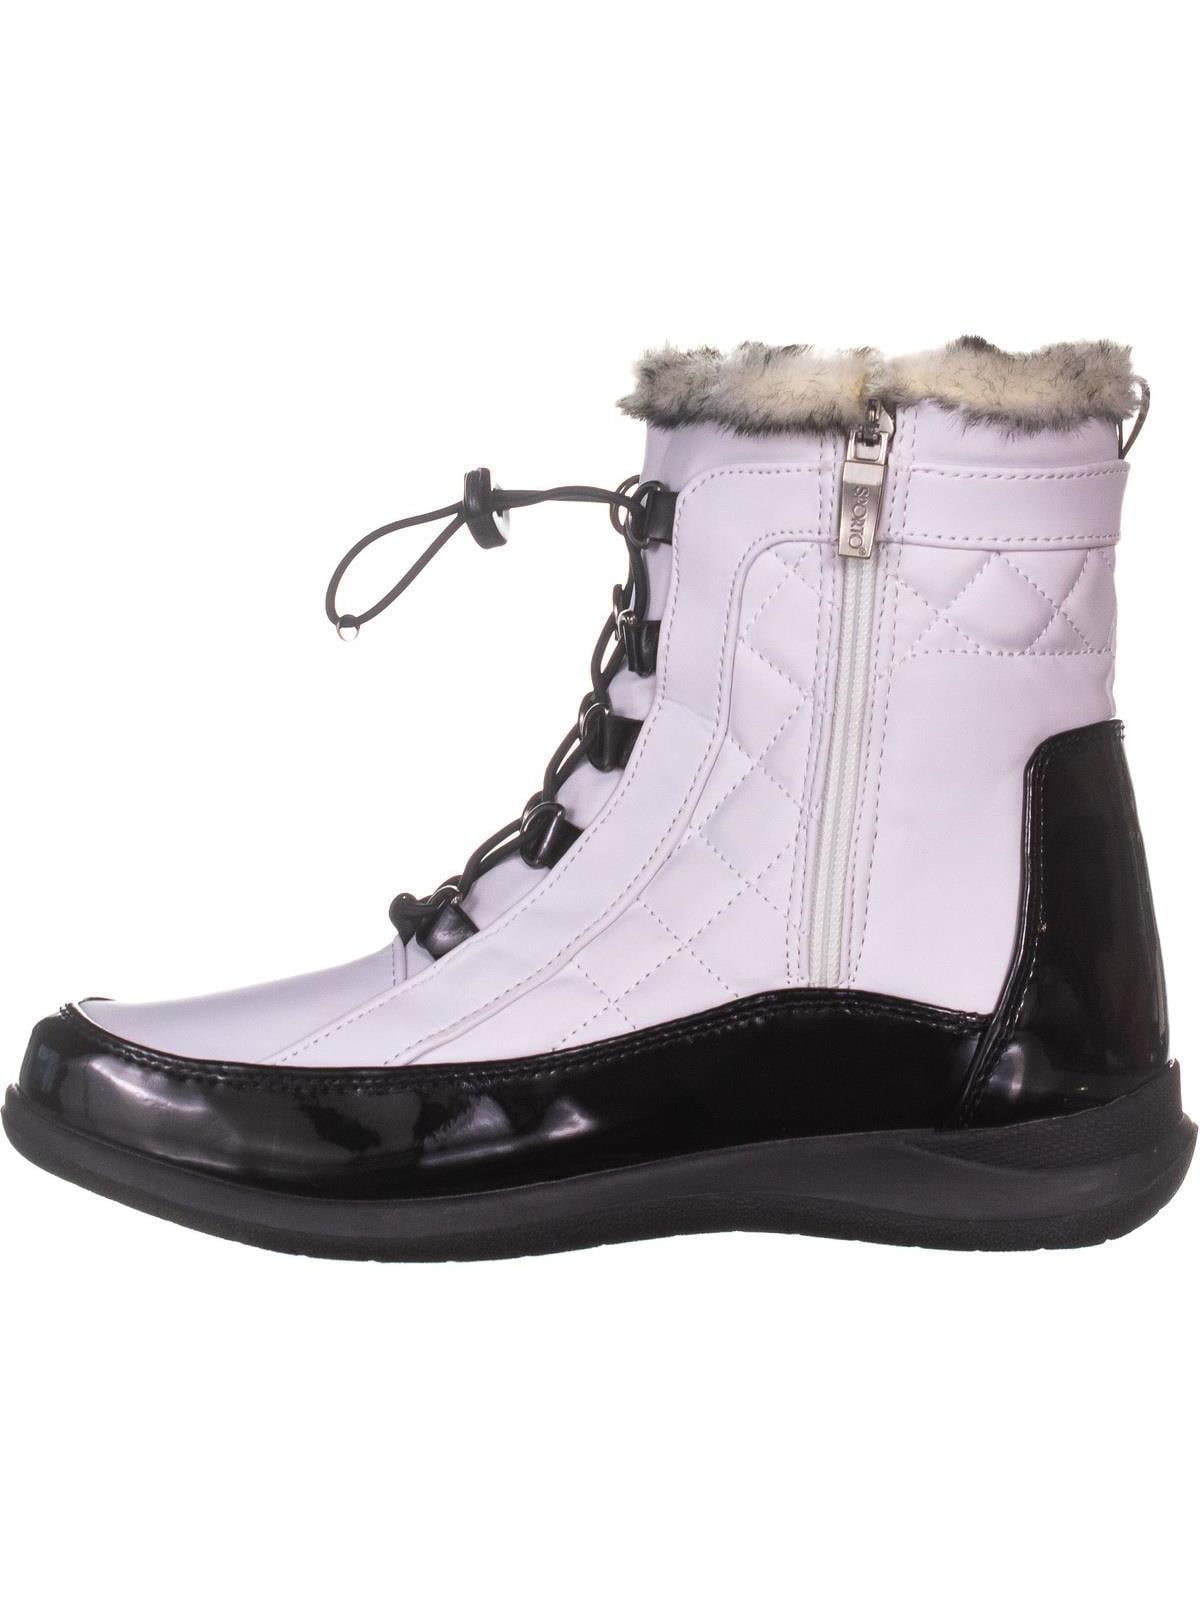 Sporto Jenny Mid Calf Winter Boots 